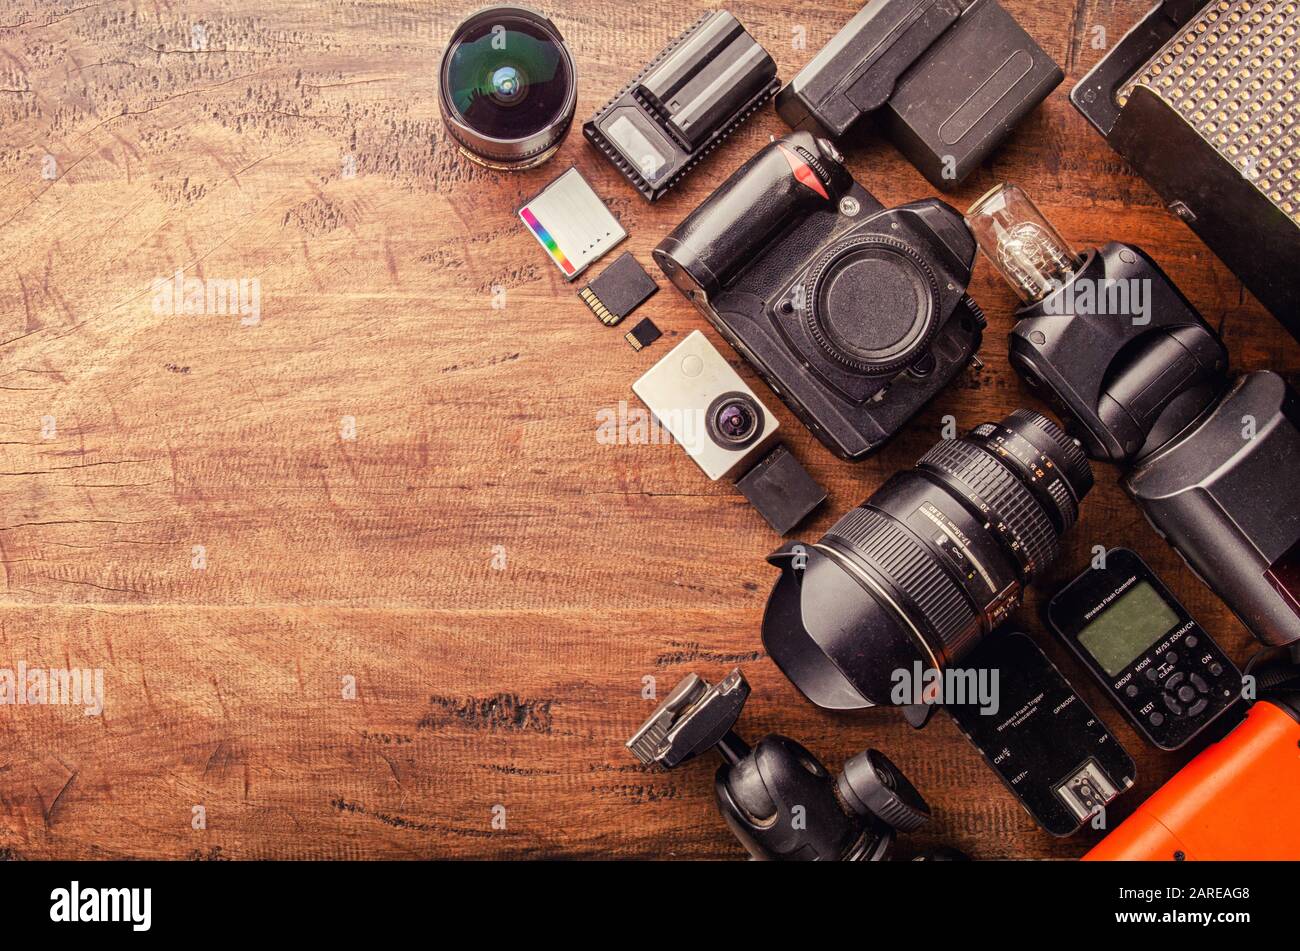 Fotoausrüstung Digitalkamera, Blitzlicht, Blitzauslöser, LED, Speicherkarte  CF SD MicroSD, Objektive, Stativ, Akku für Hobby Reisefotografie cr  Stockfotografie - Alamy